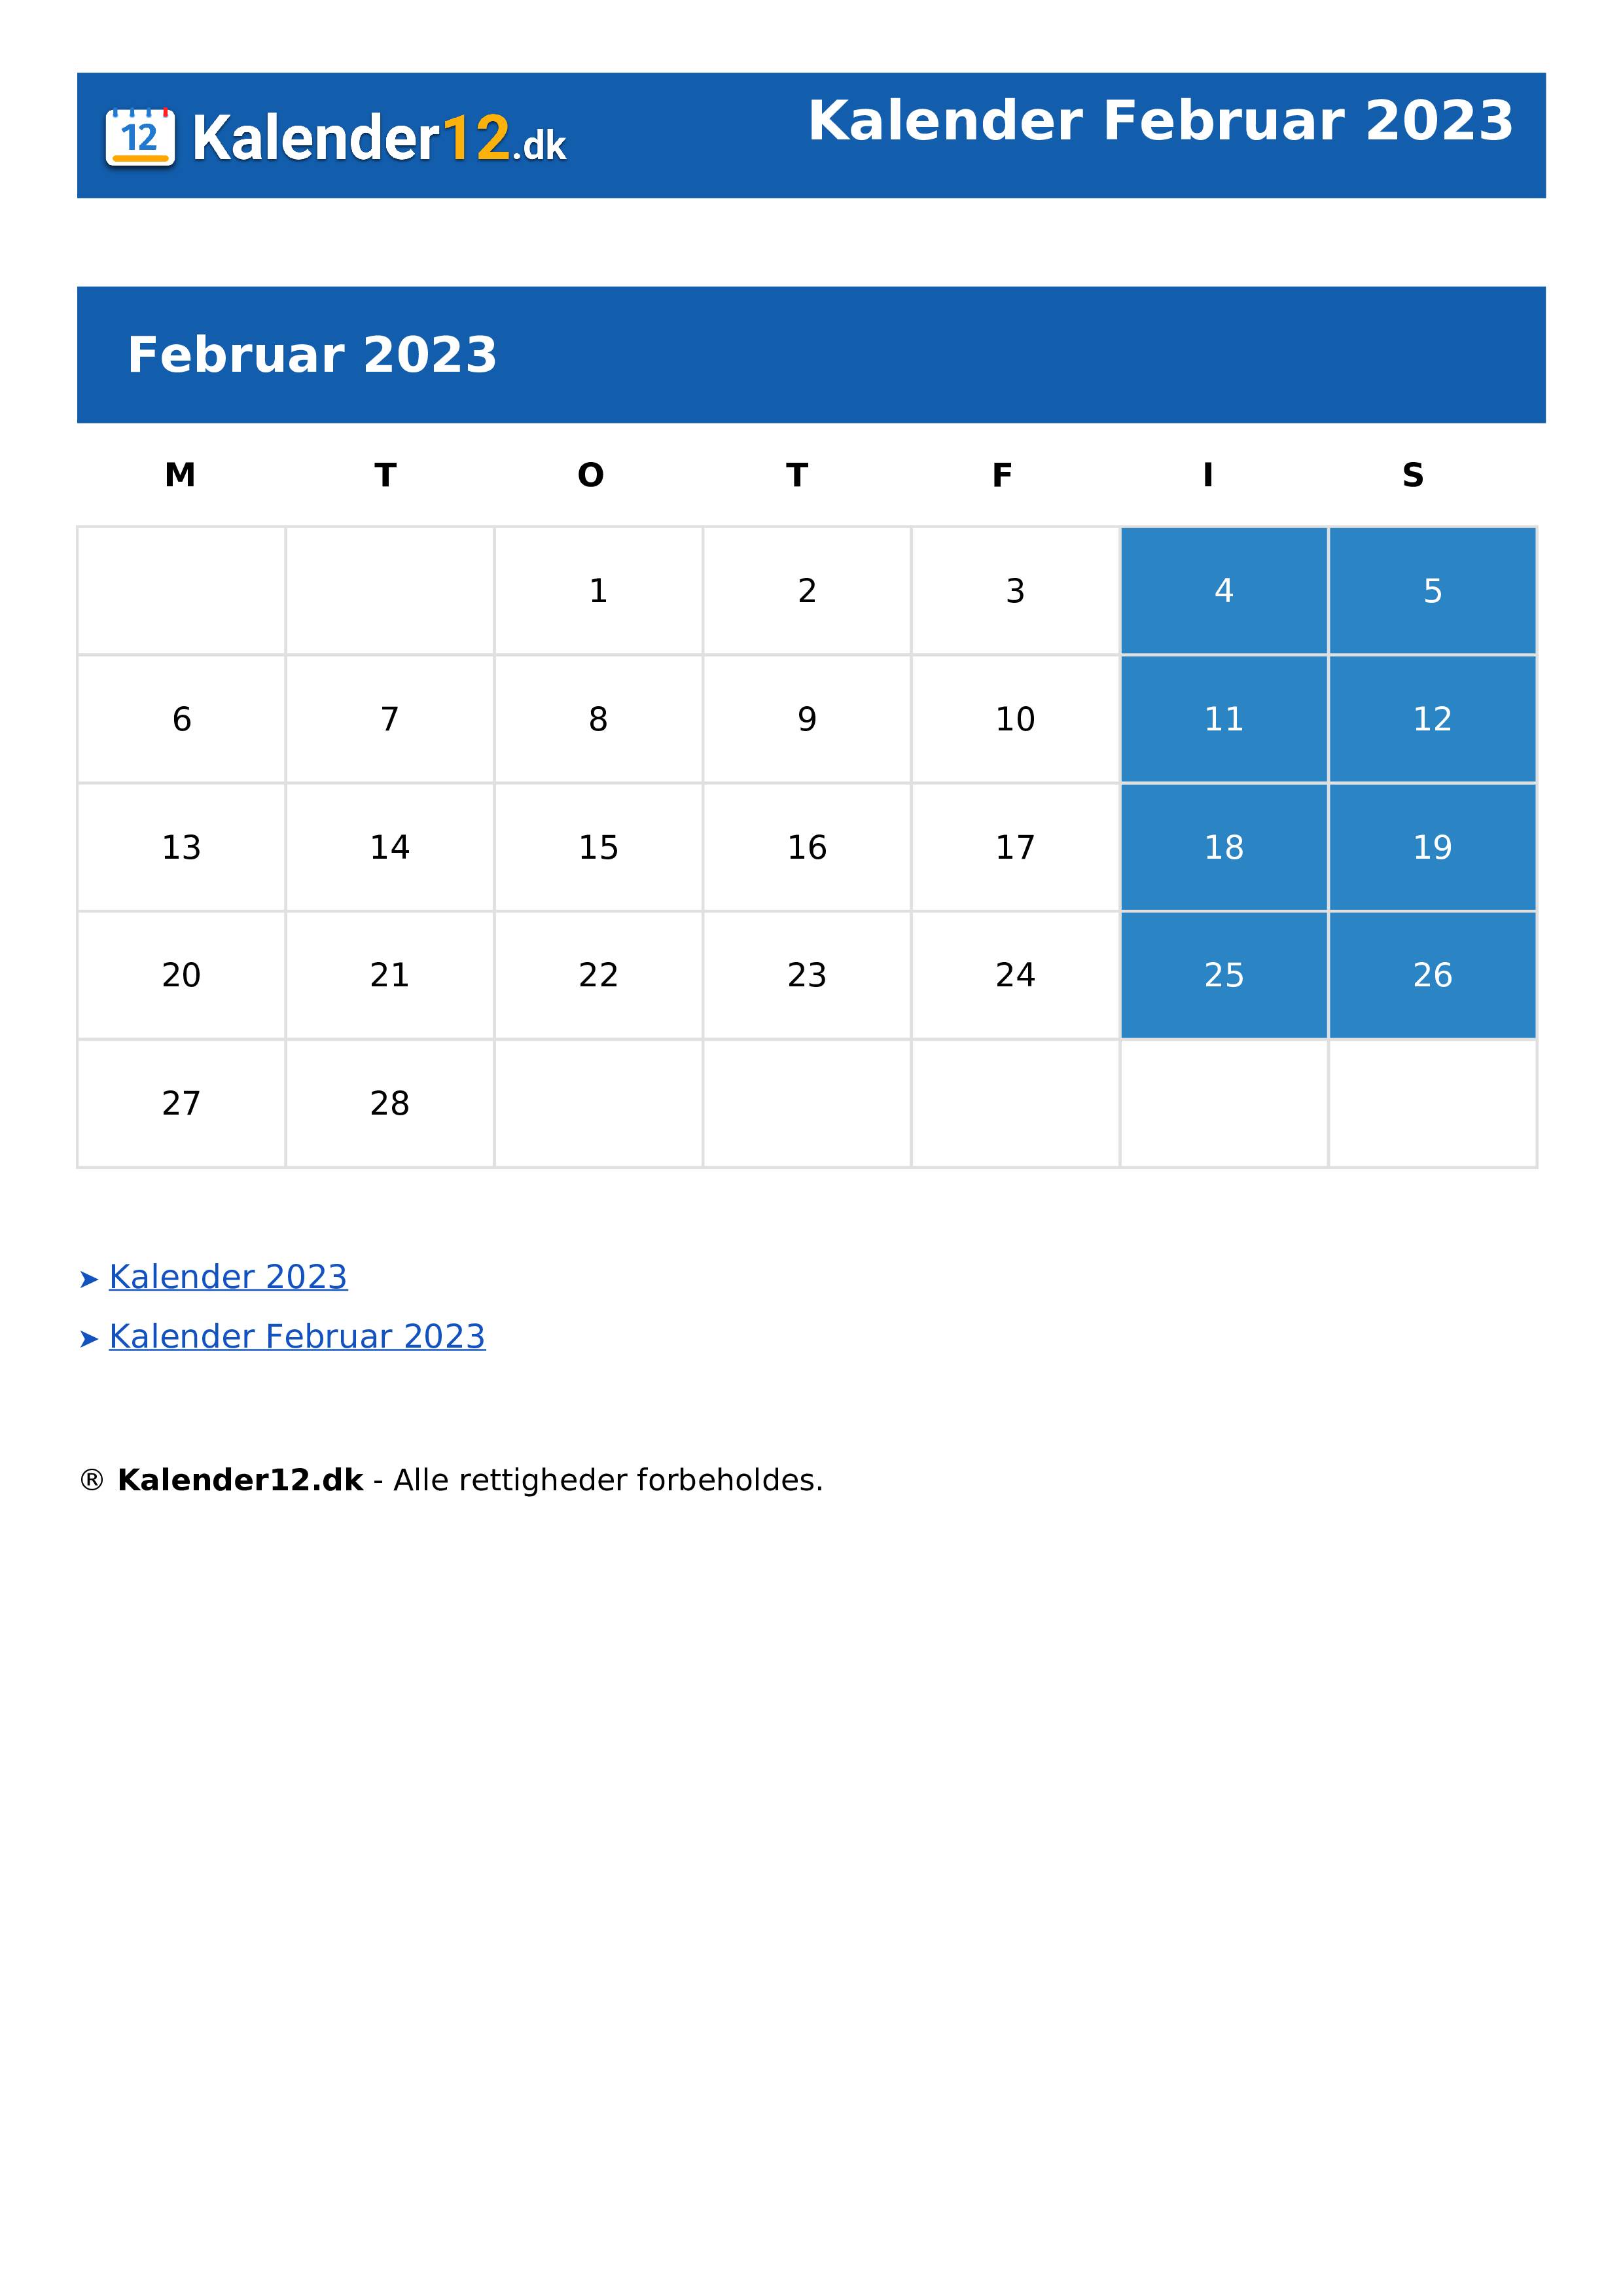 Calendar Februar 2023